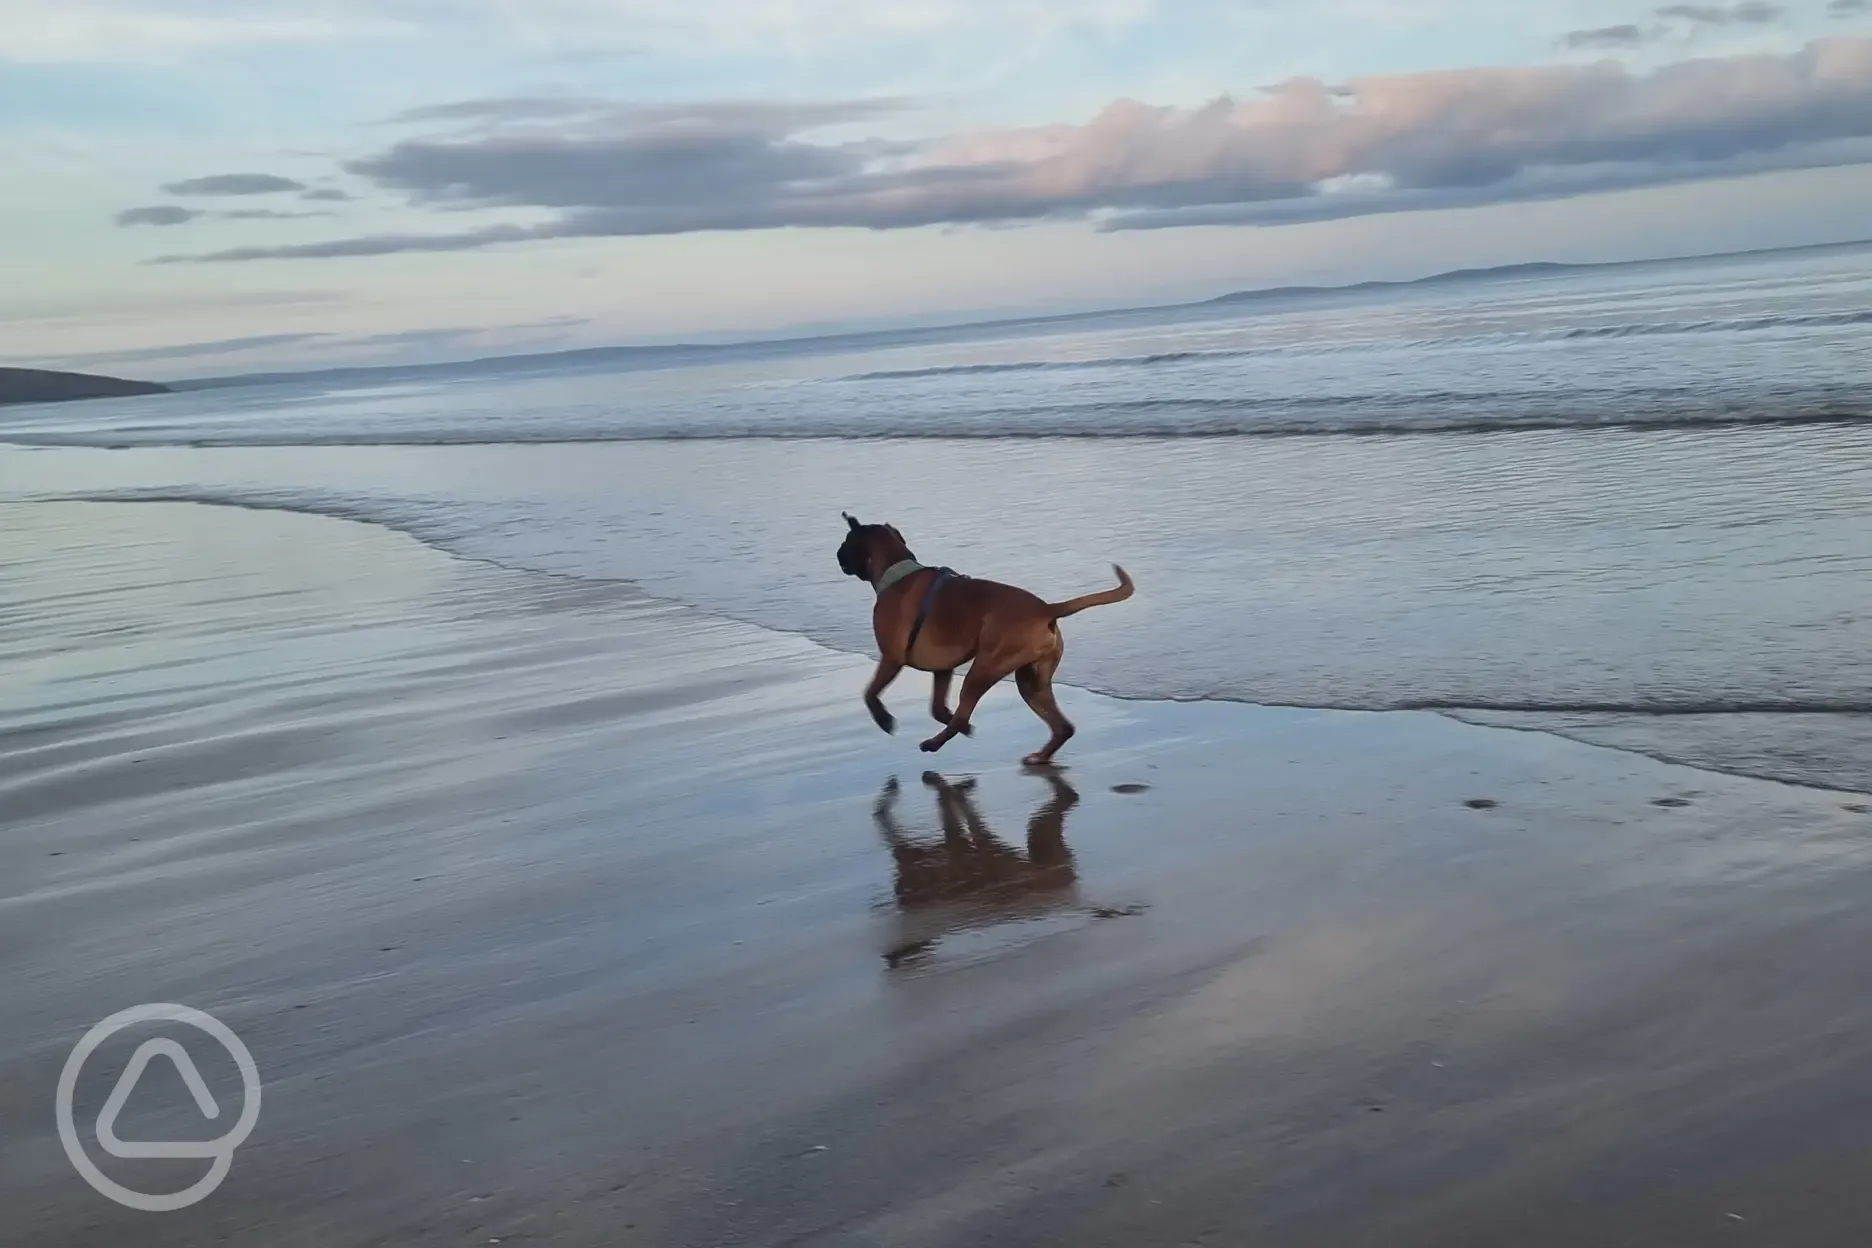 Dog friendly sandy beaches a short drive away